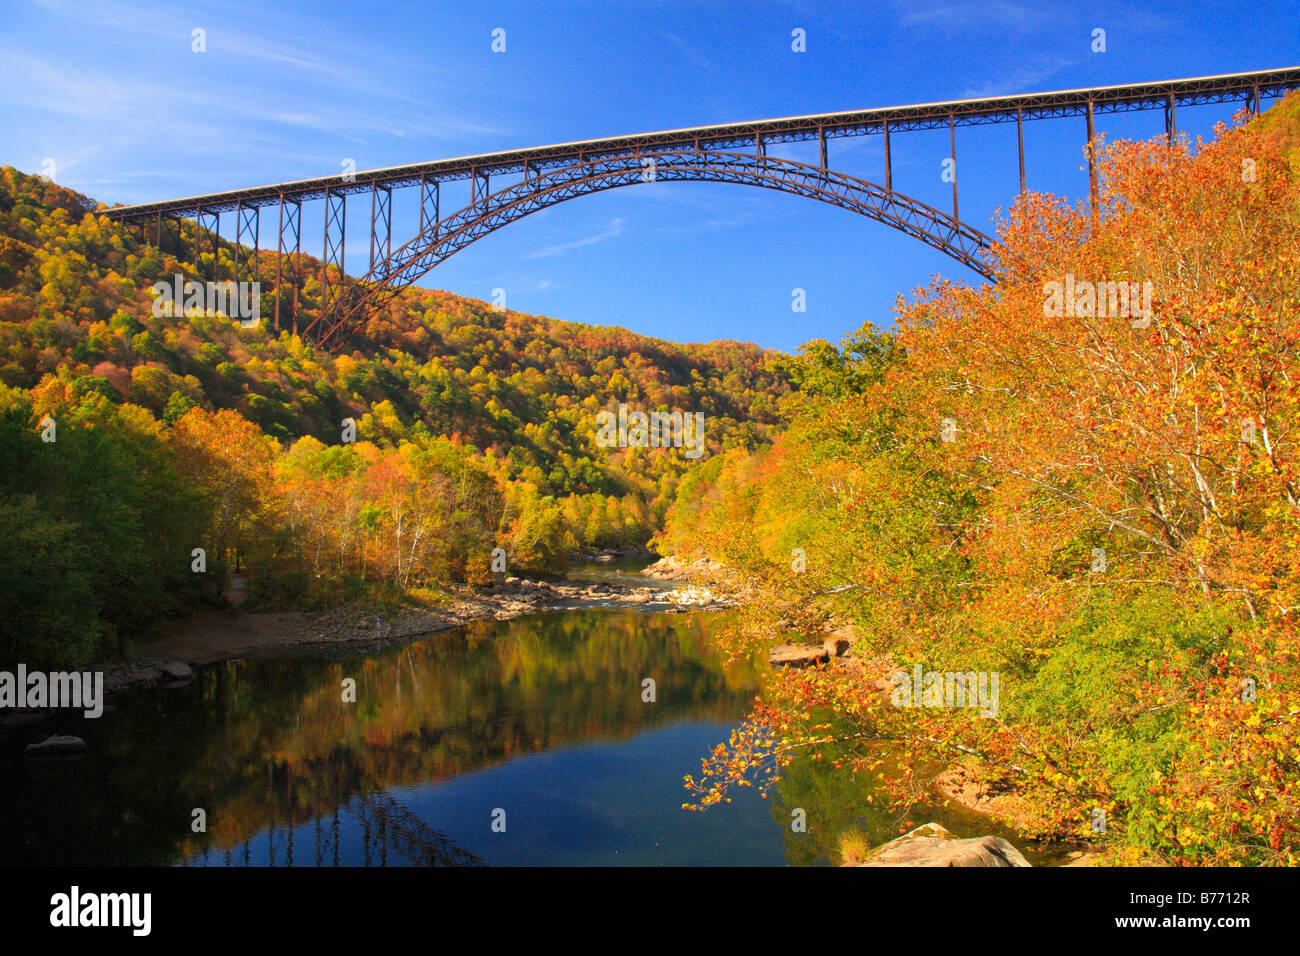 New River Gorge Bridge, New River Gorge National River, West Virginia, USA Stockfoto